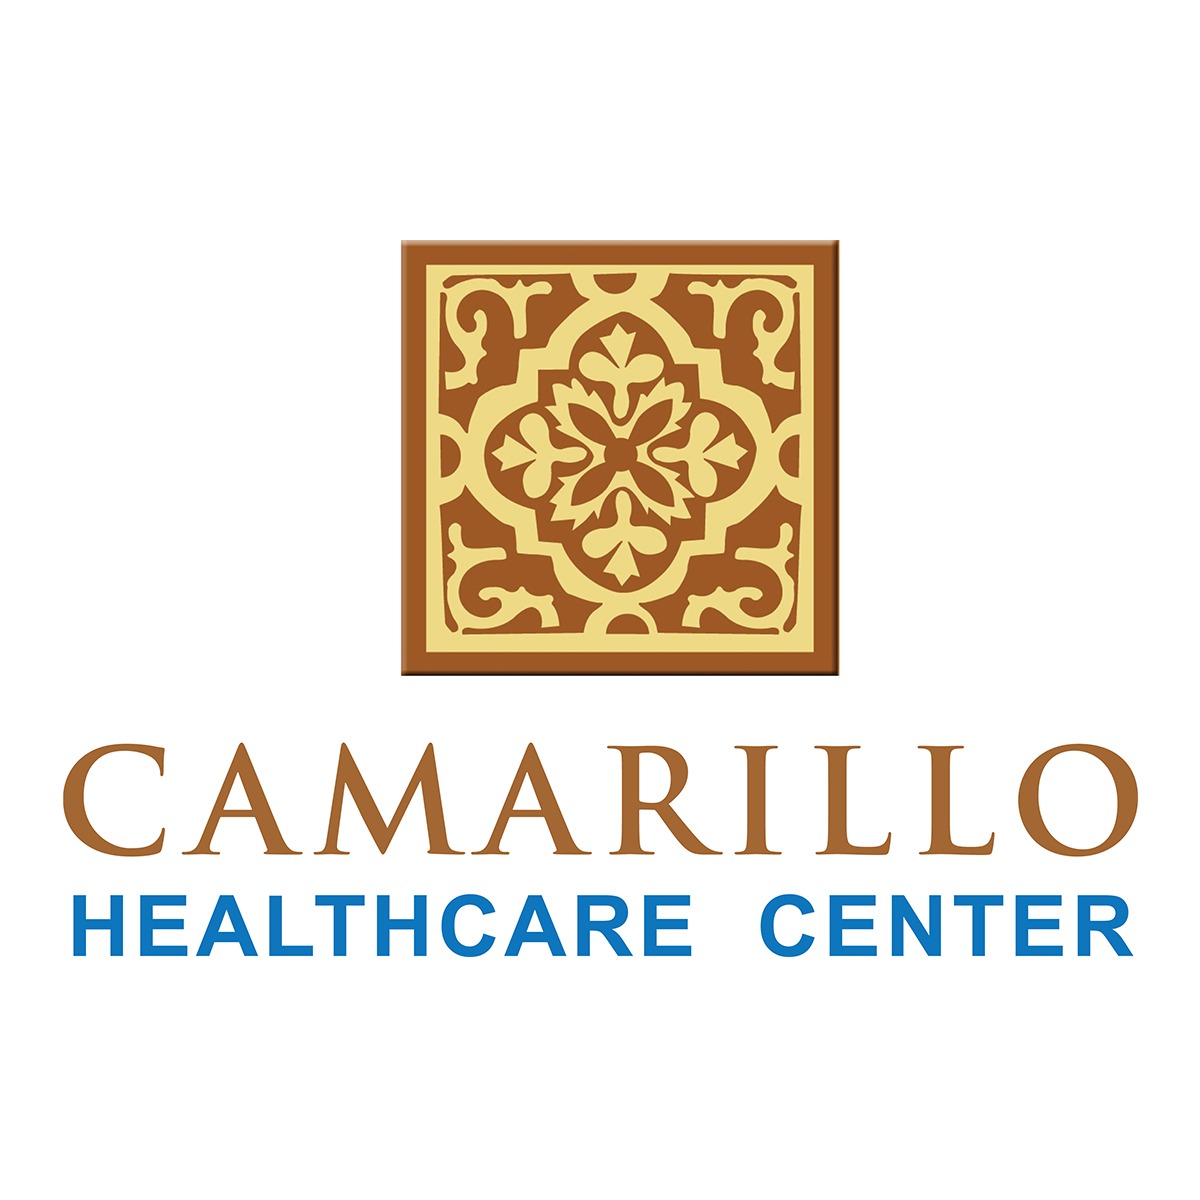 Camarillo Healthcare Center